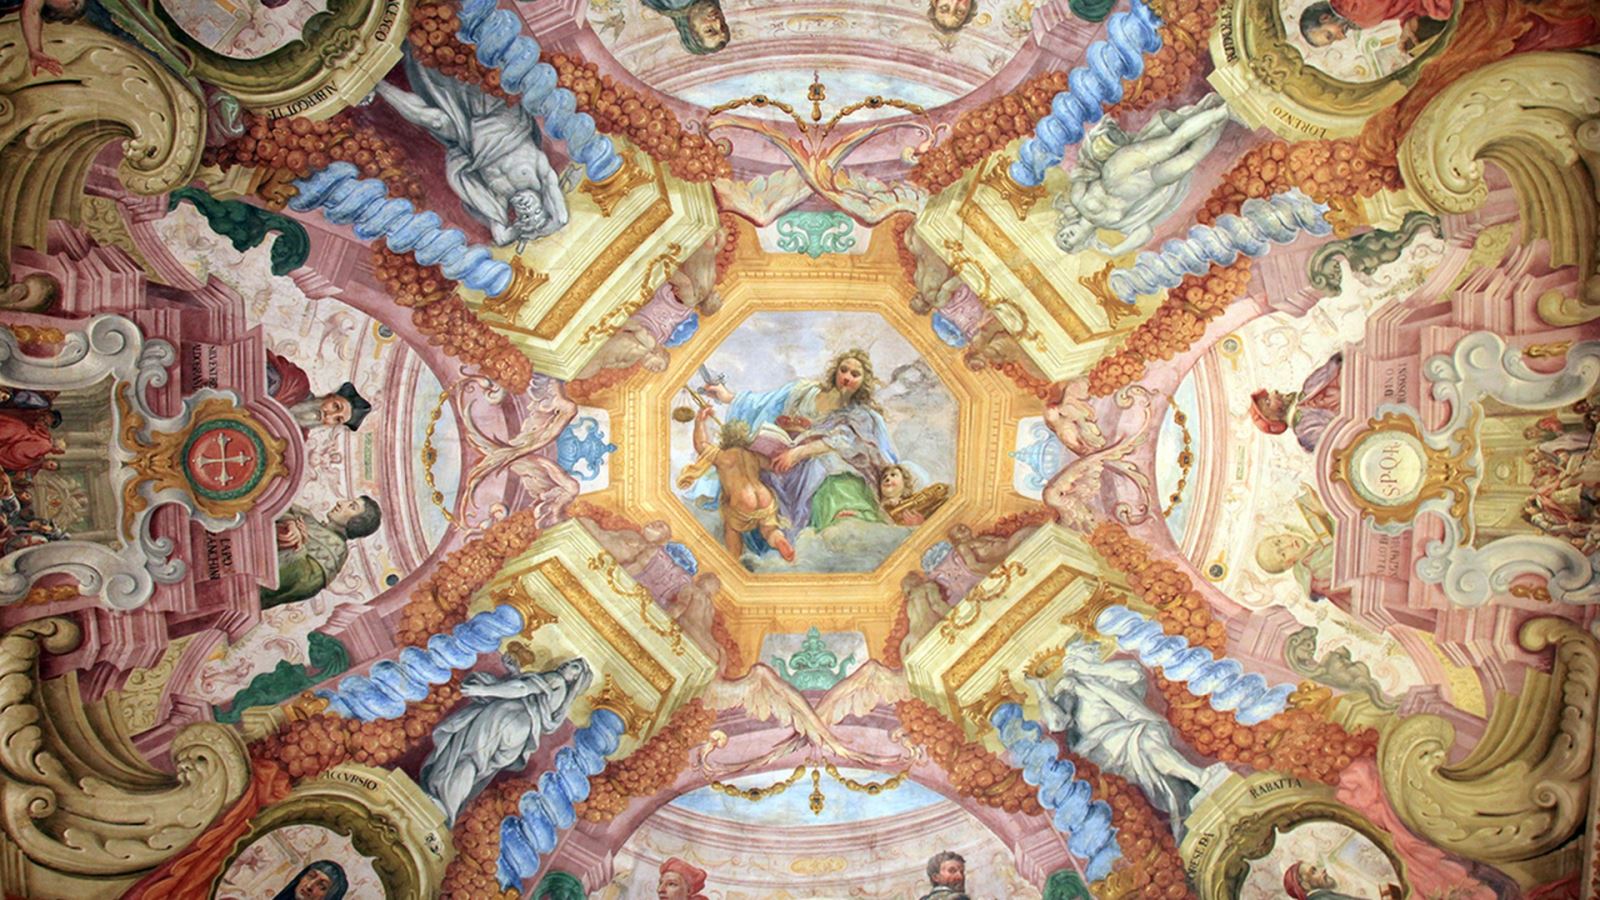  exquisite ceiling paintings